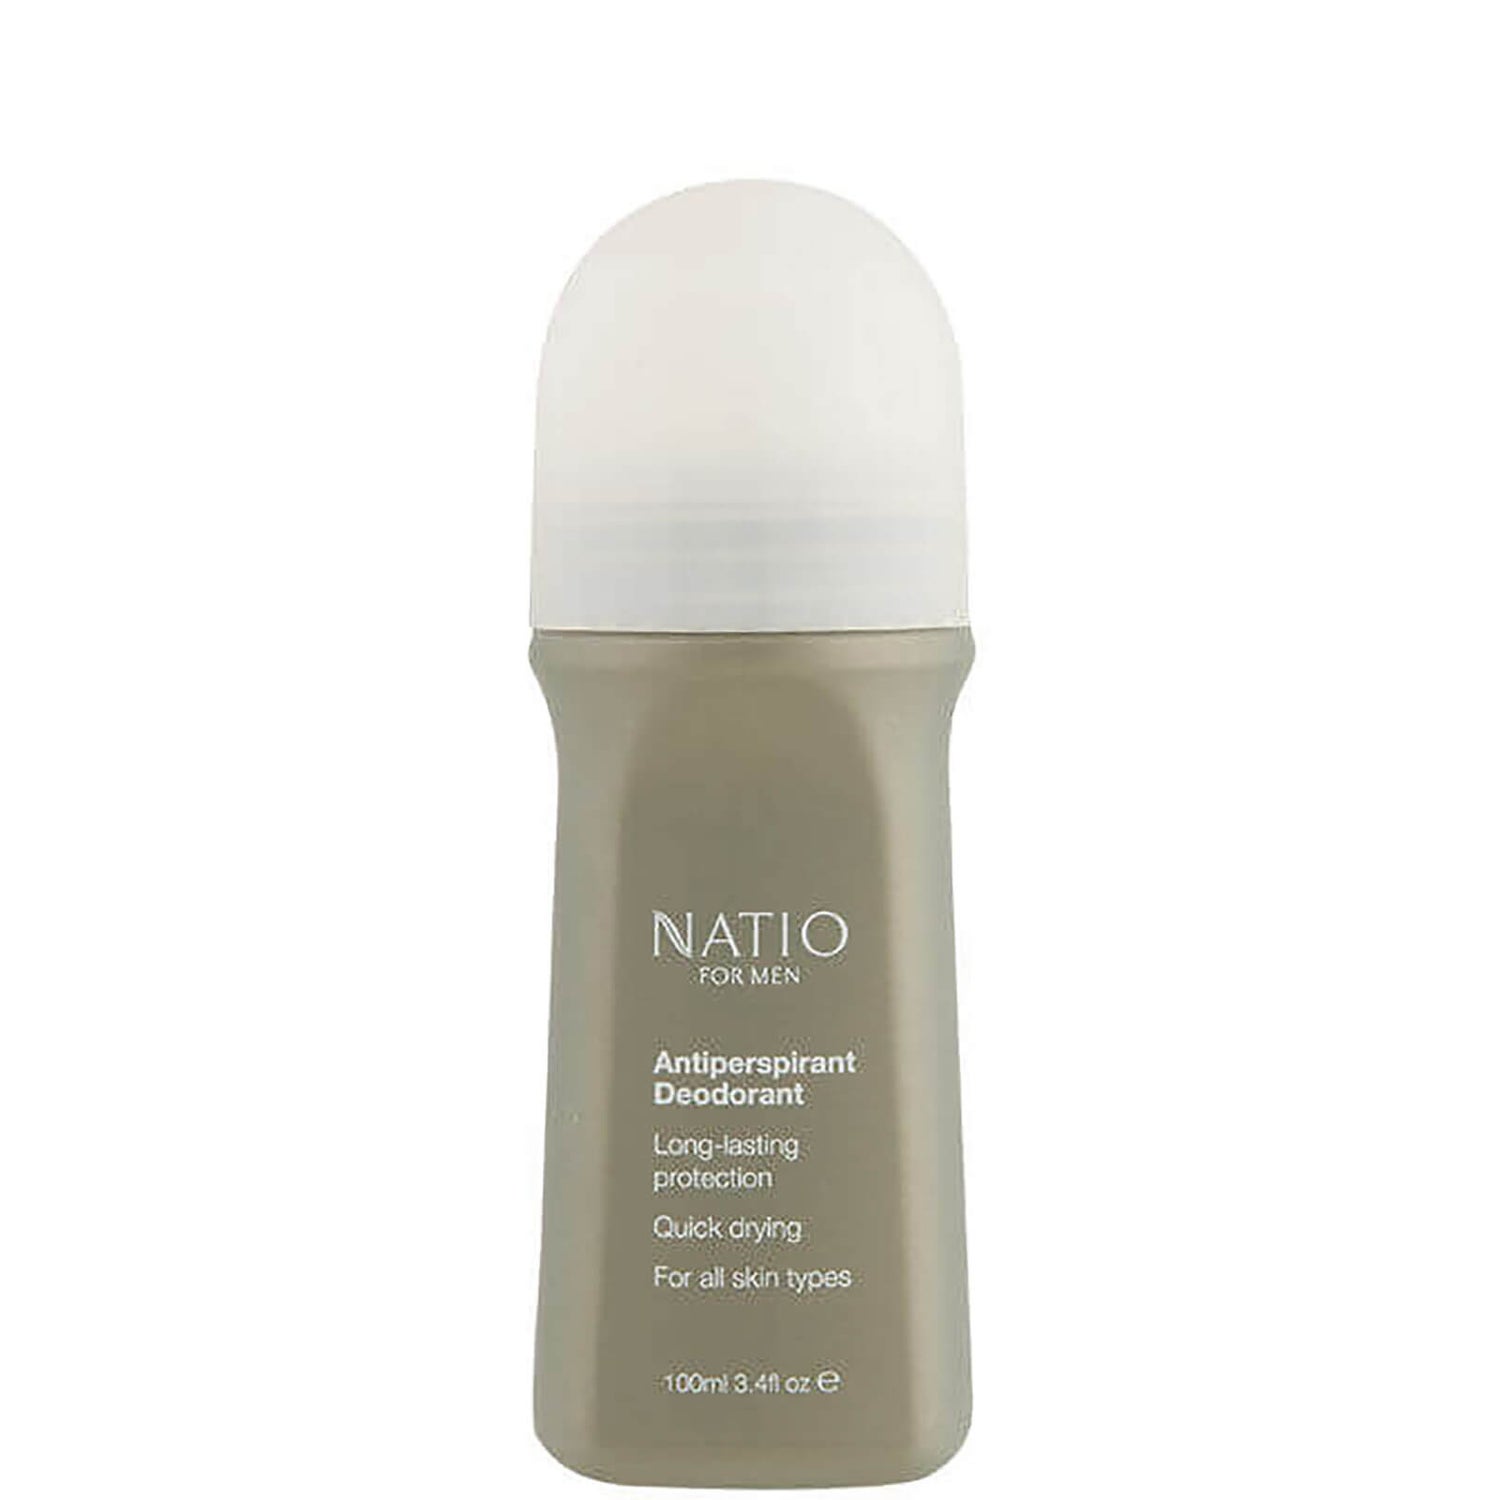 Natio For Men Antiperspirant Deodorant antyperspirant w dezodorancie (100 ml)